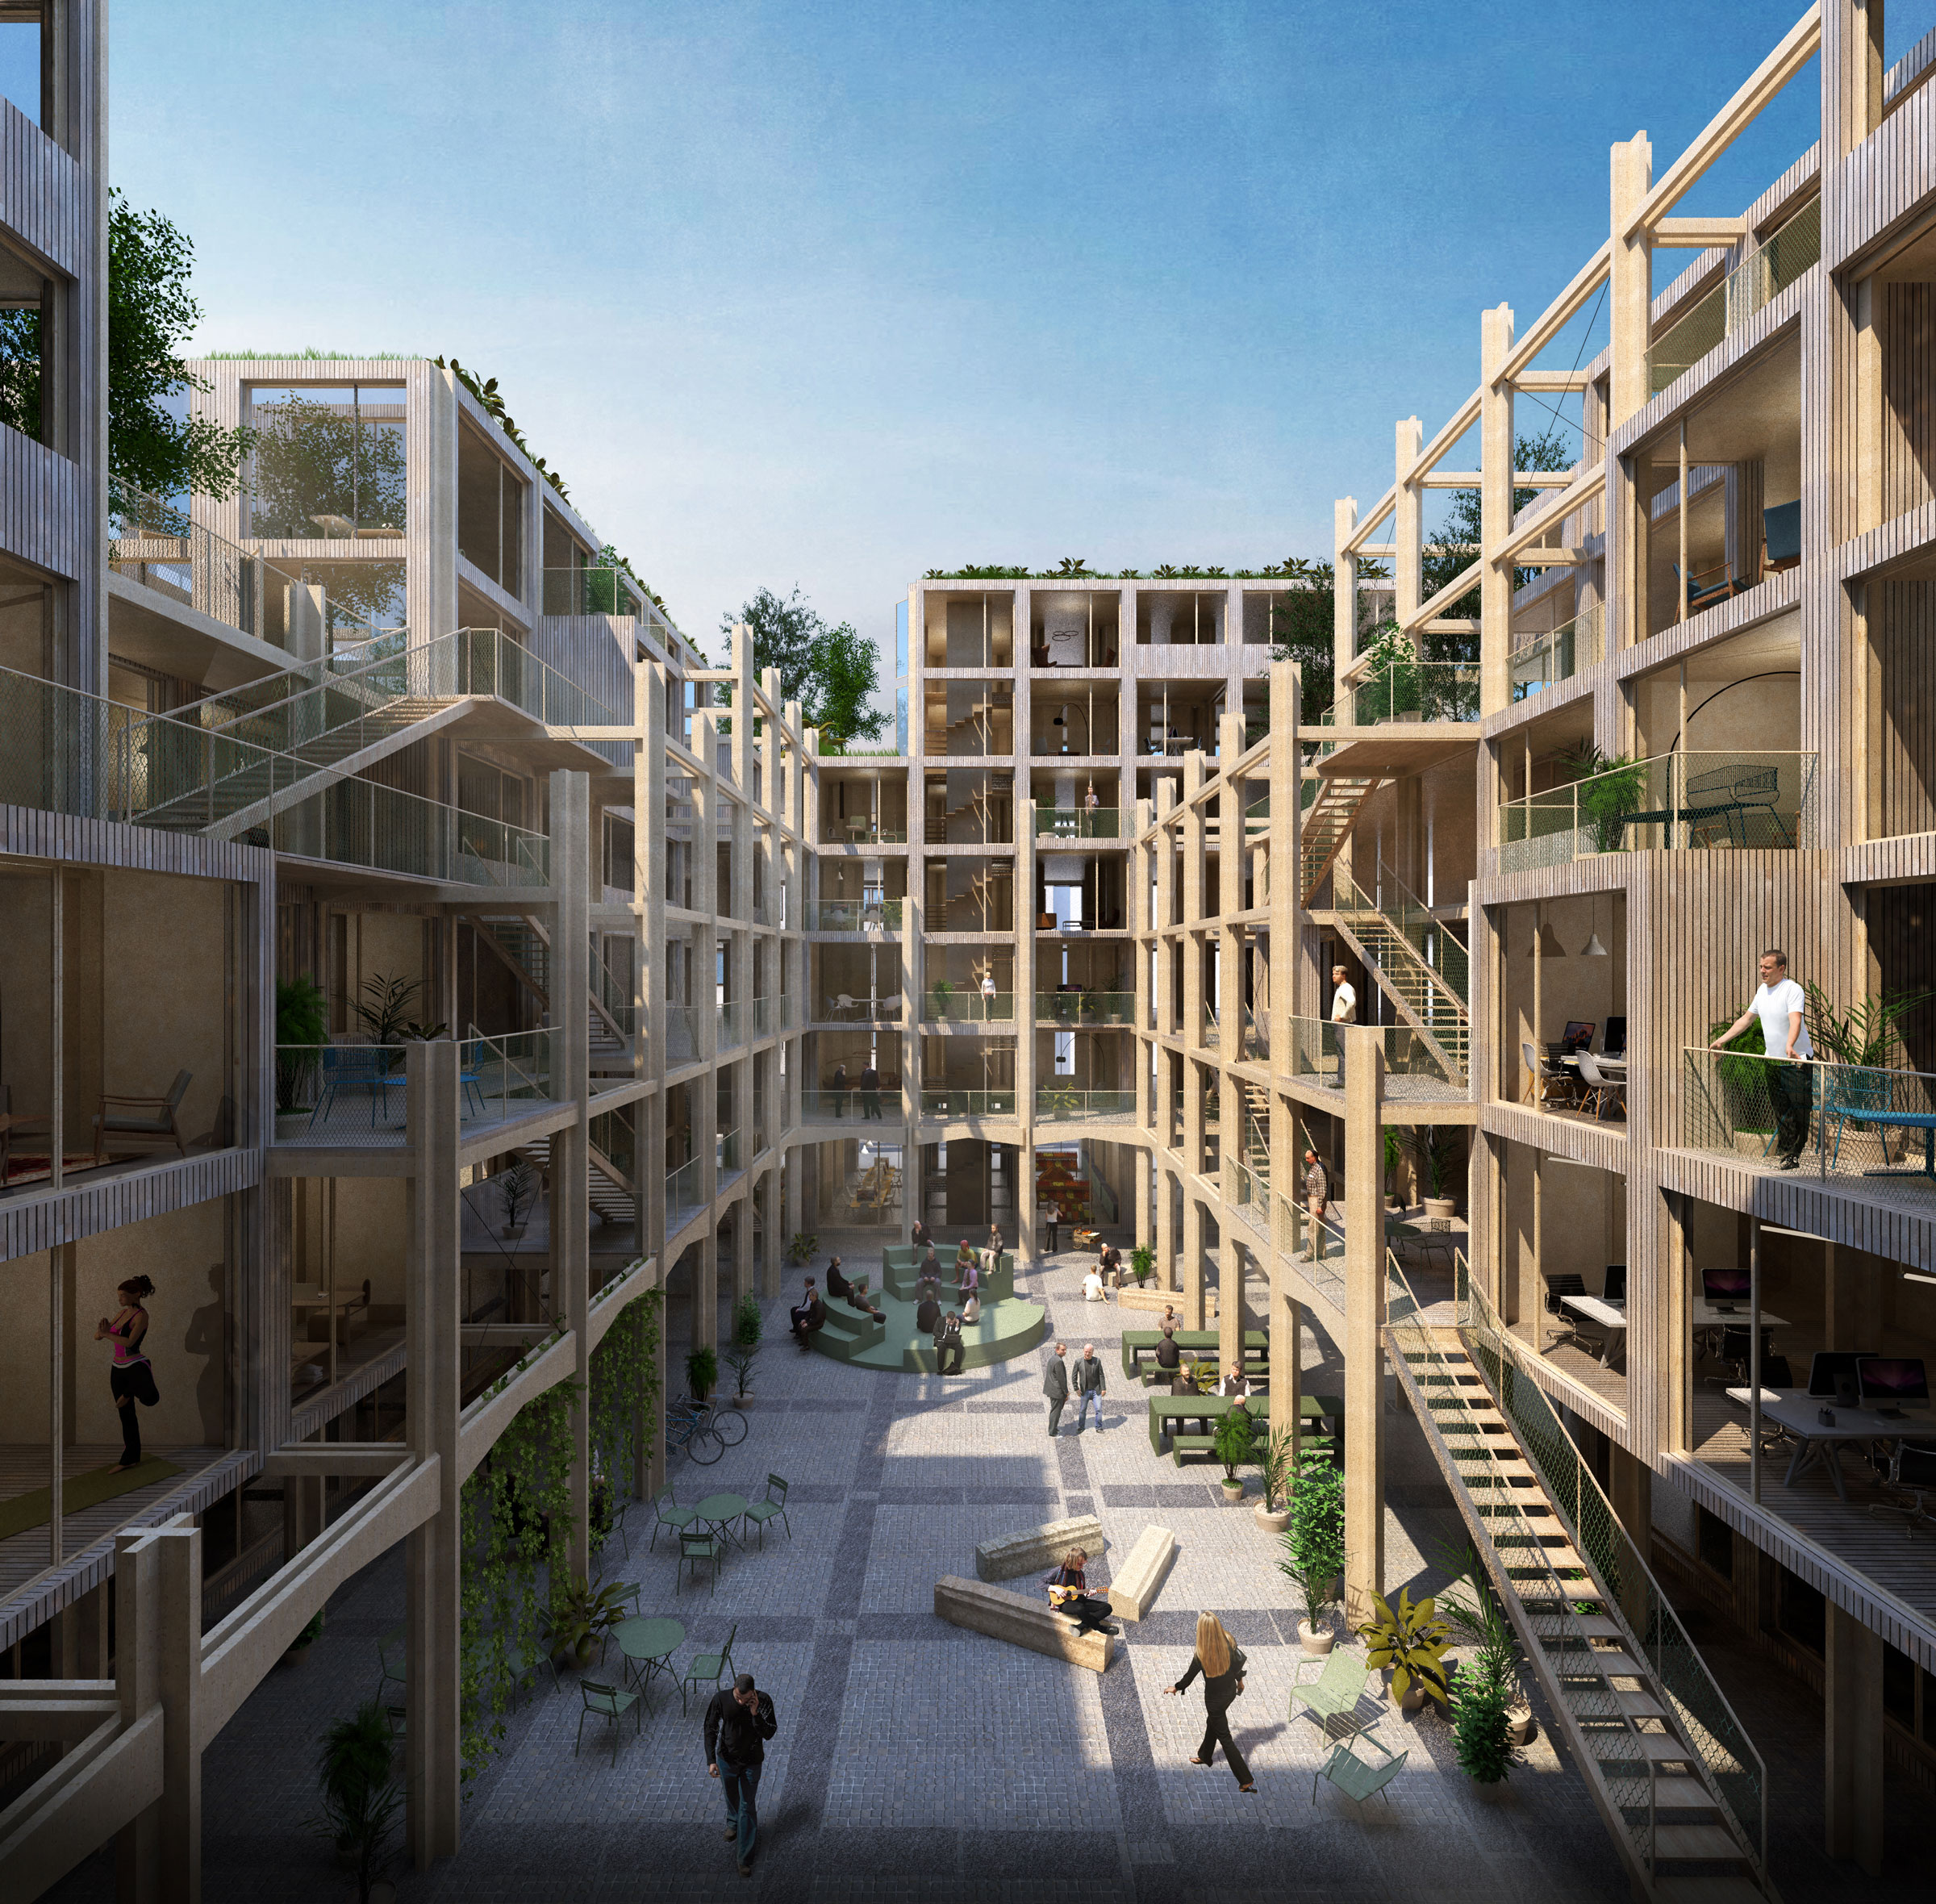 The “aula modula” apartment block design by Studio BELEM